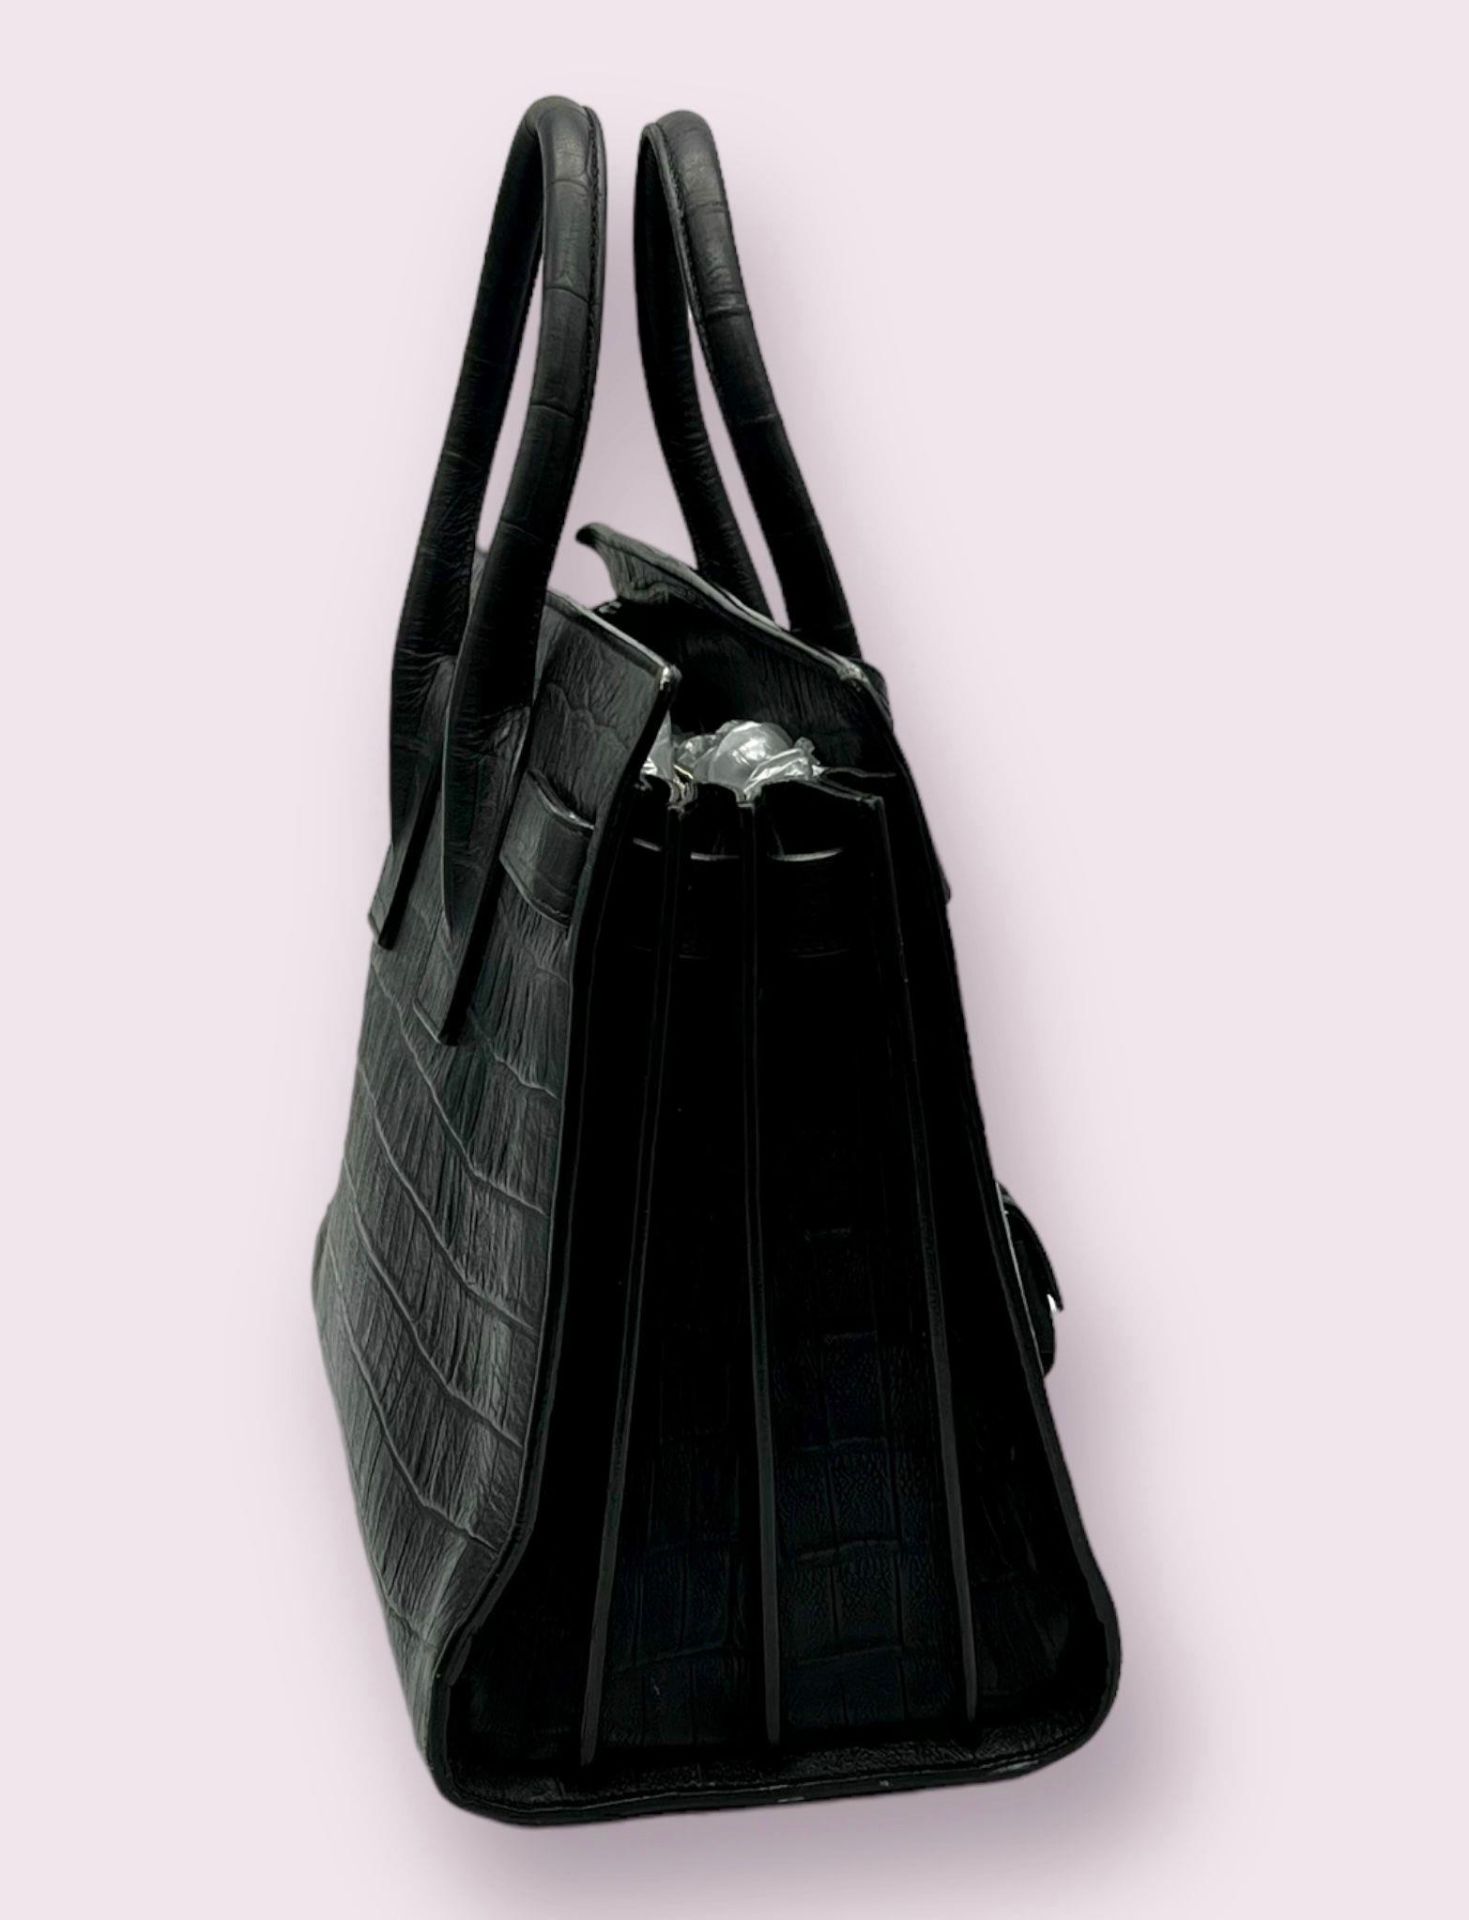 A Saint Laurent Sac de Jour Black Leather Tote Bag. Textured crocodile embossed black leather - Bild 3 aus 7